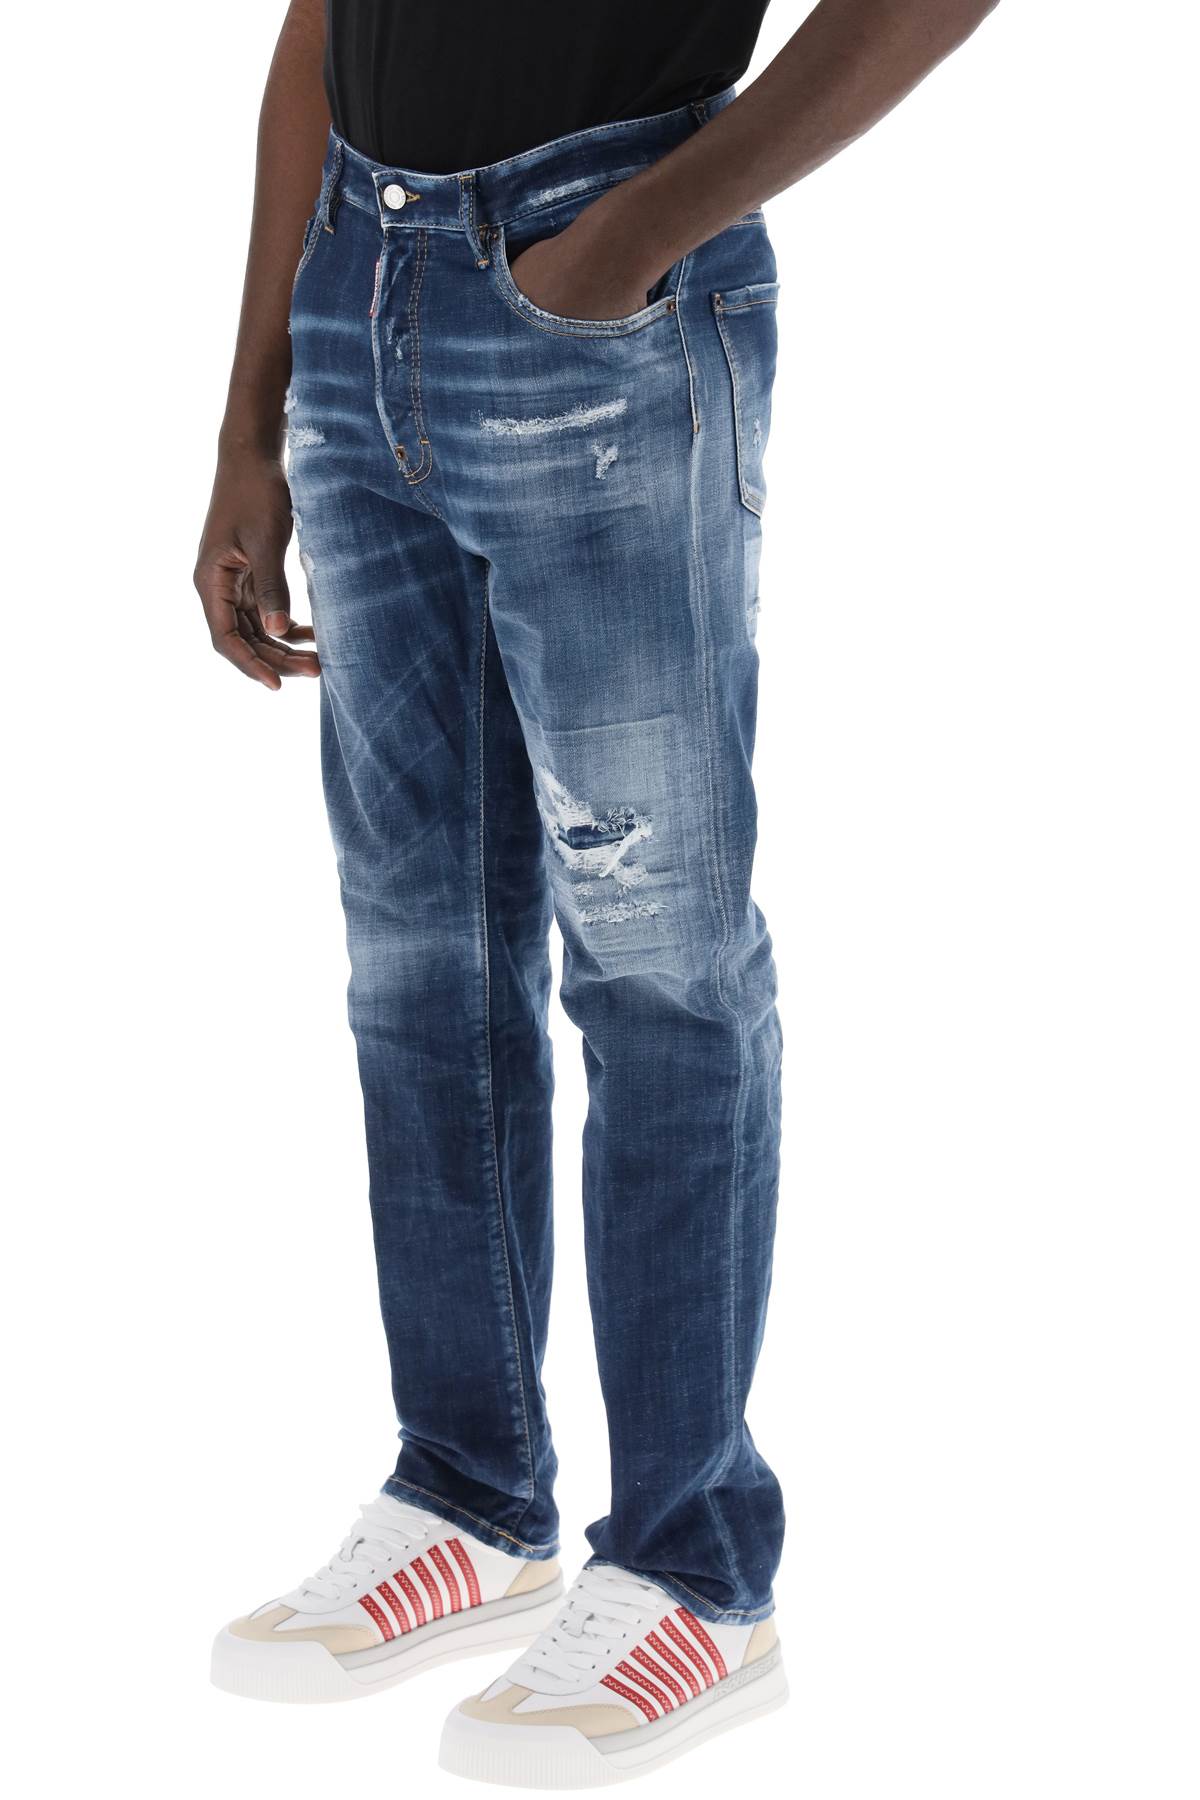 Dsquared2 jeans 642 in denim destroyed-3